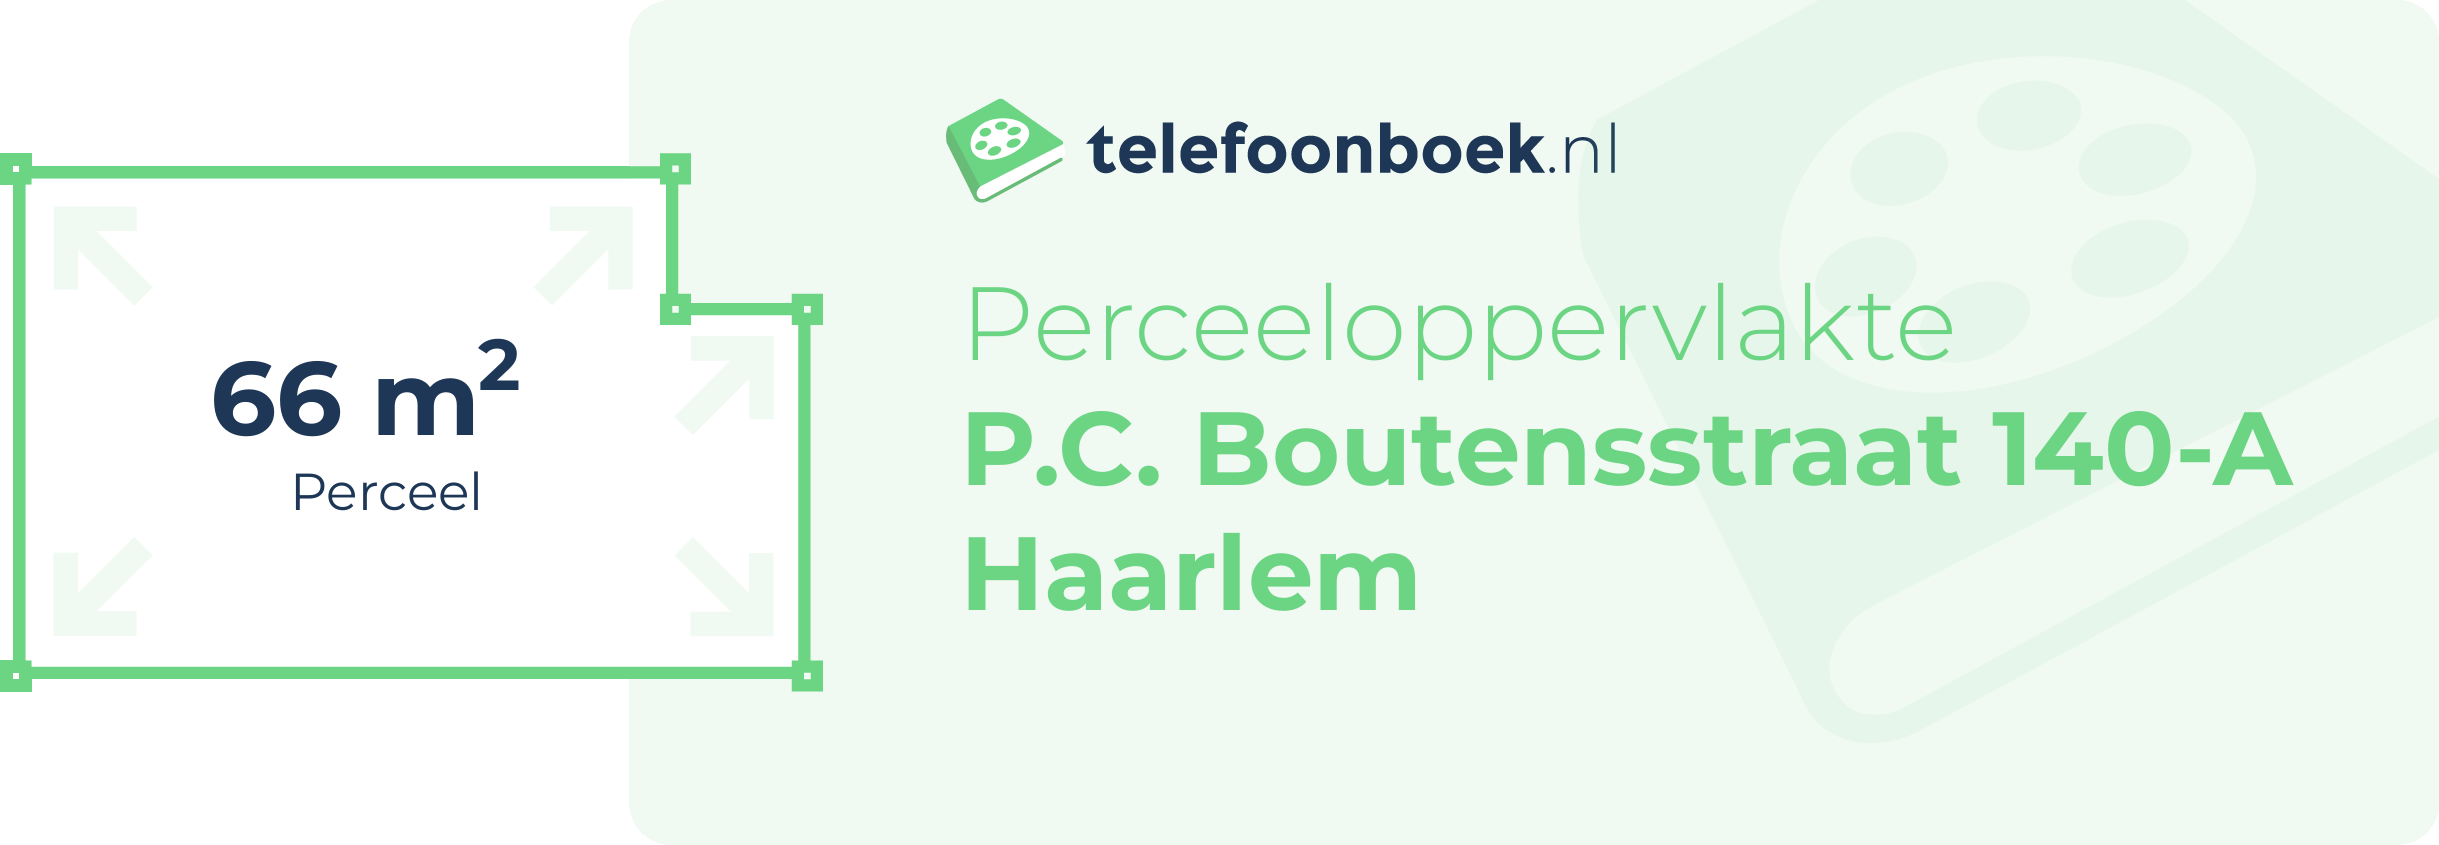 Perceeloppervlakte P.C. Boutensstraat 140-A Haarlem